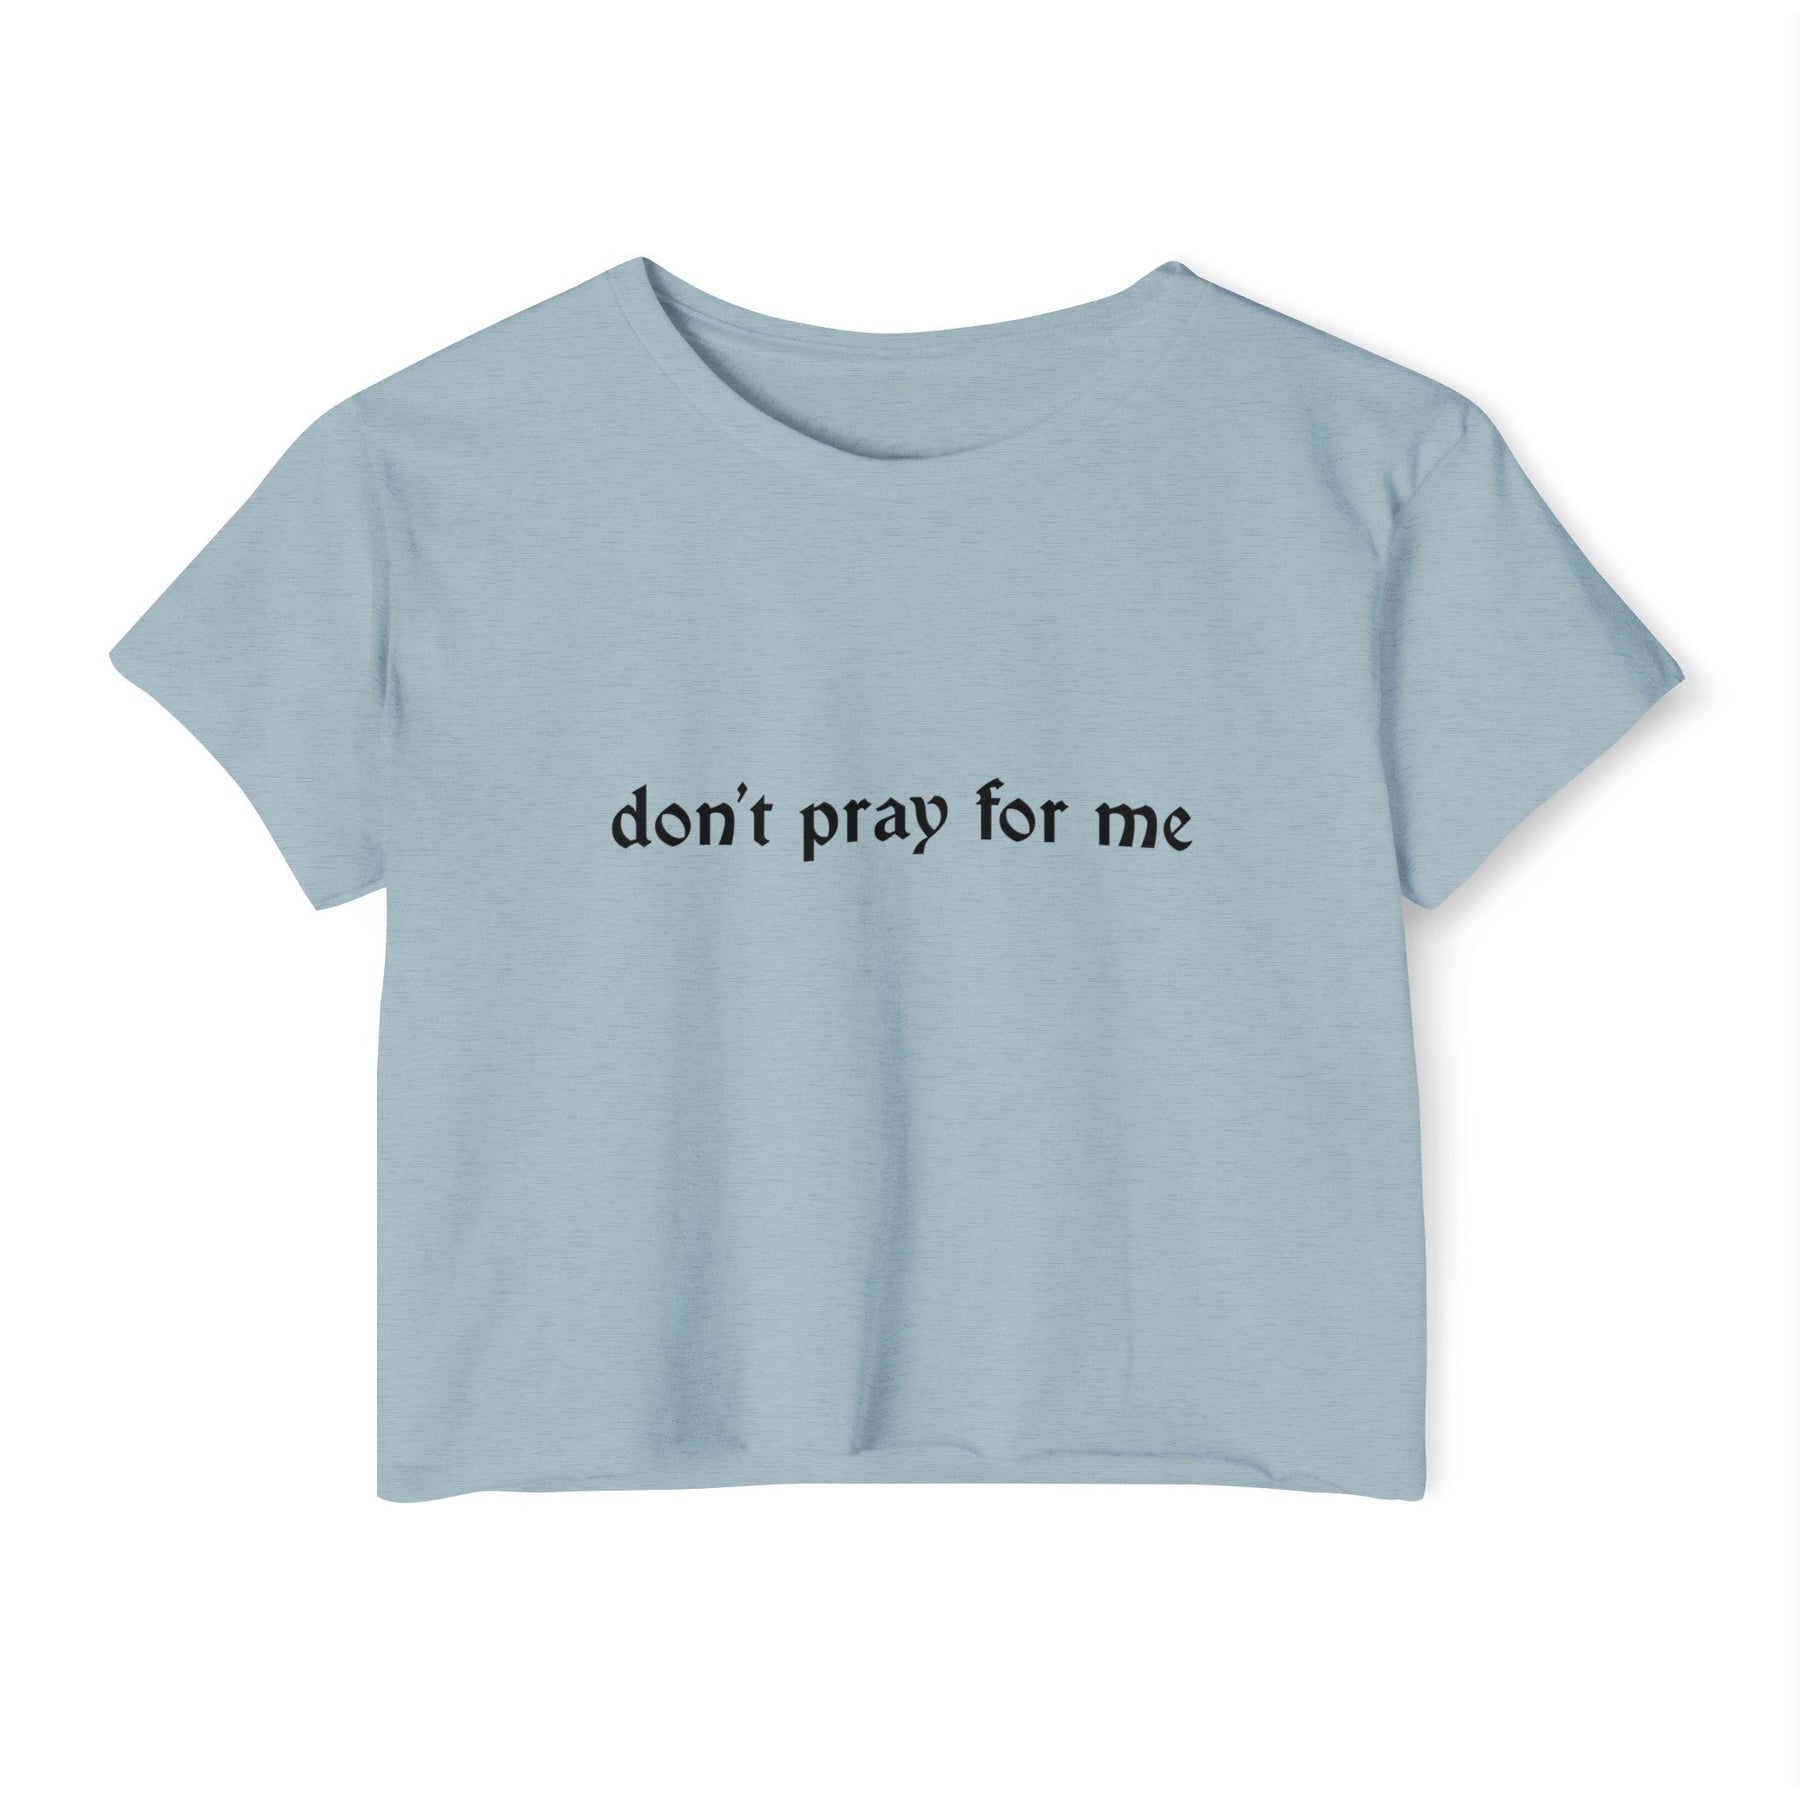 Don't Pray for Me Women's Lightweight Crop Top - Goth Cloth Co.T - Shirt27299579303169164603